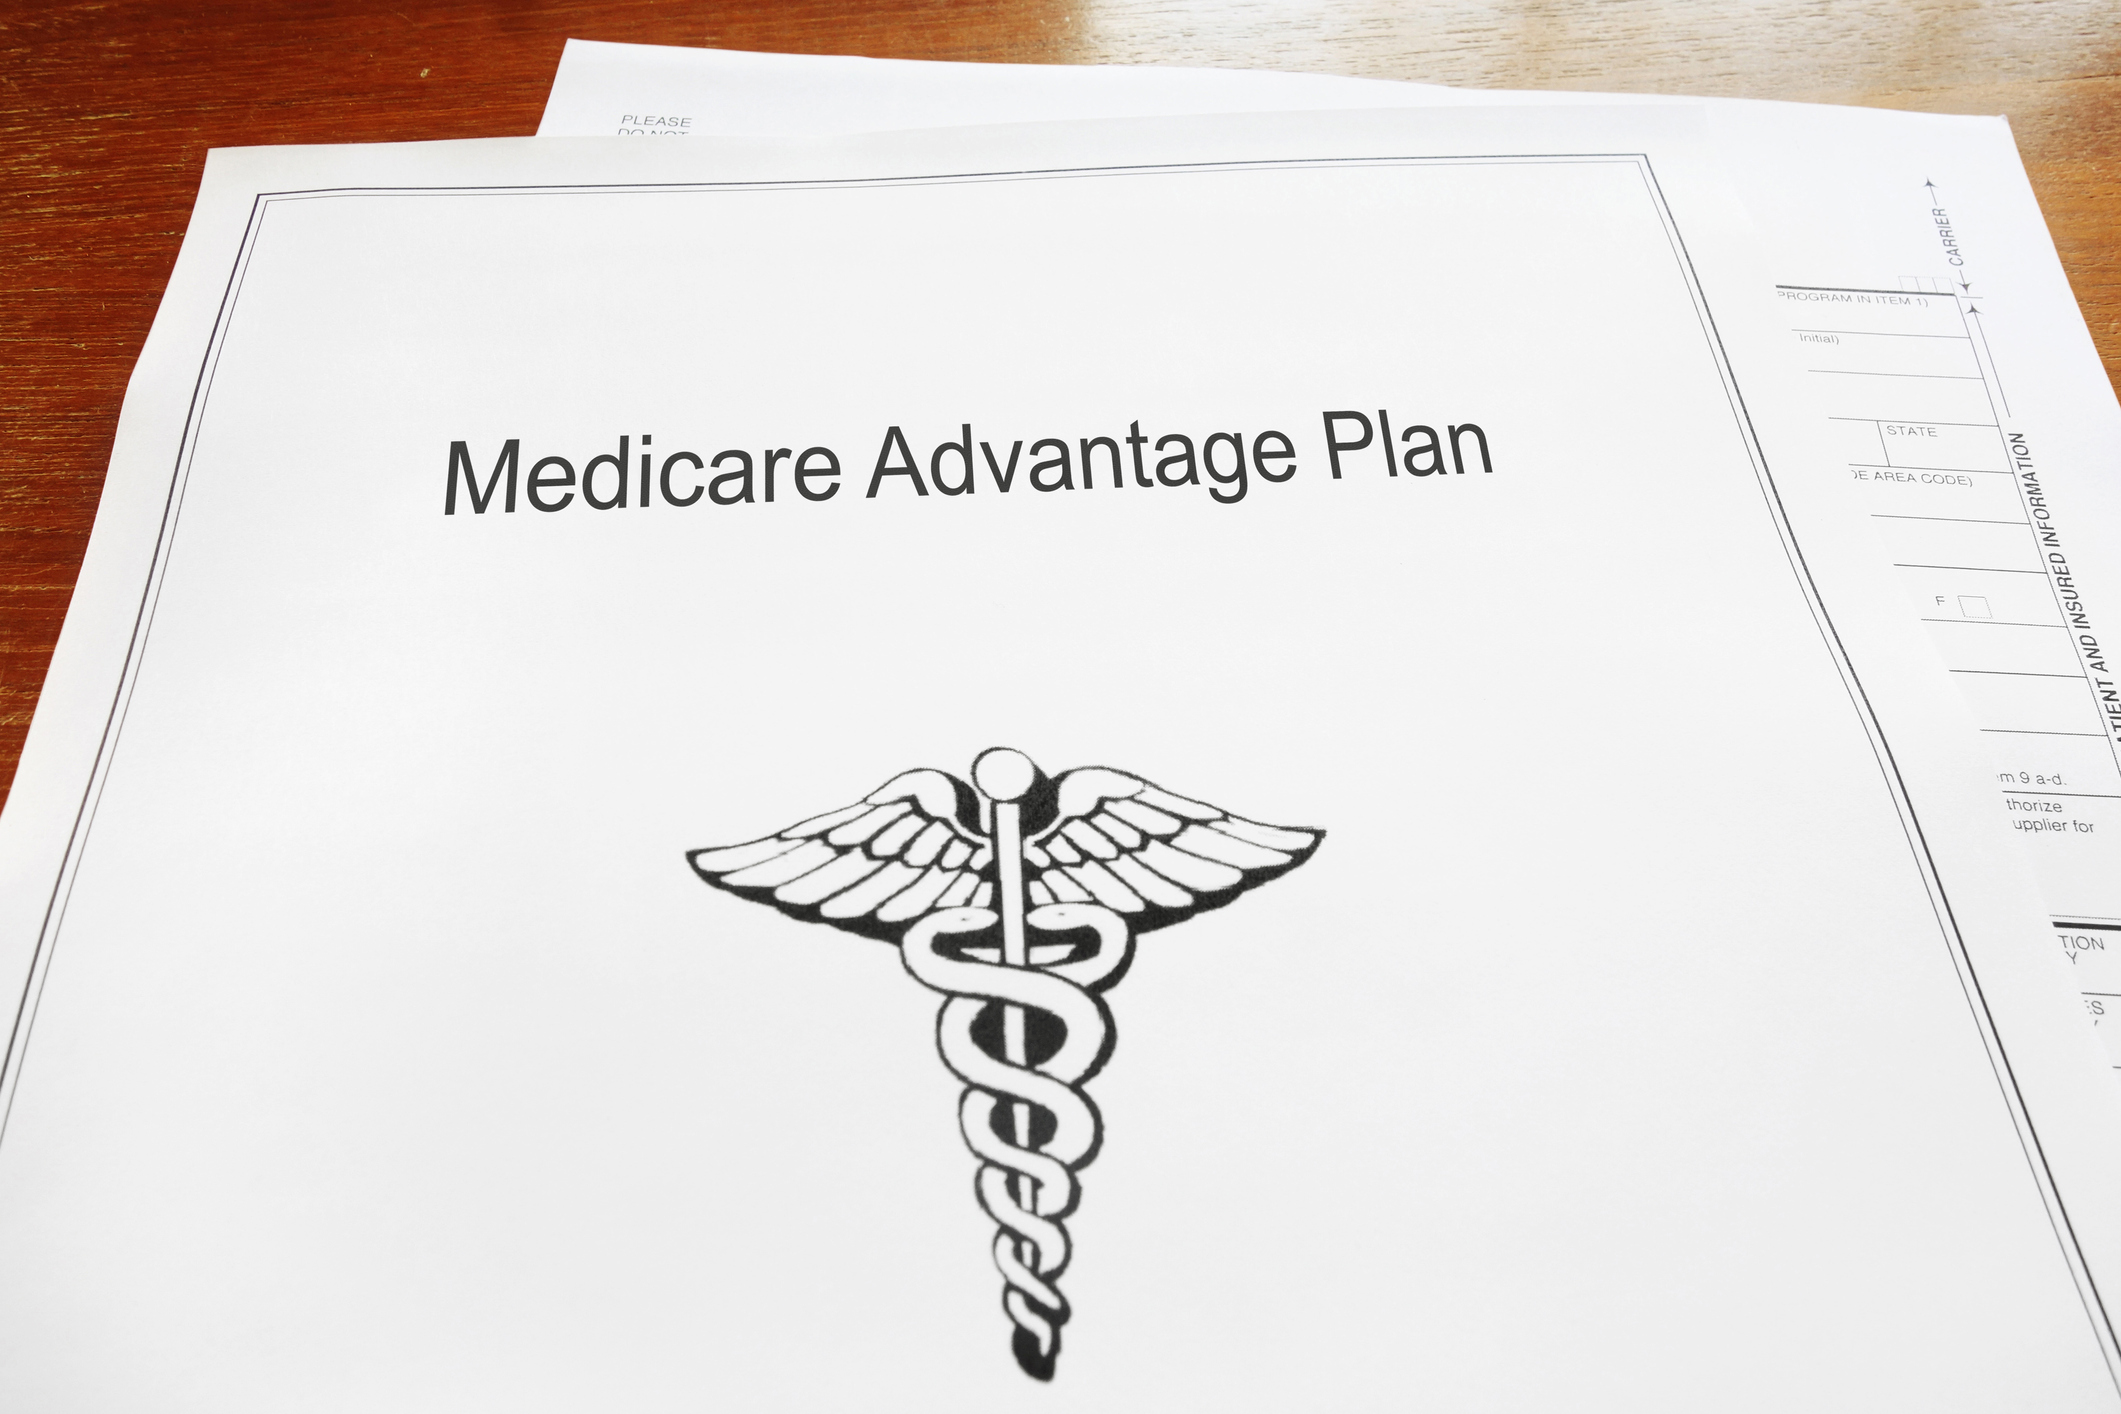 CMS data: Medicare Advantage tops 30M